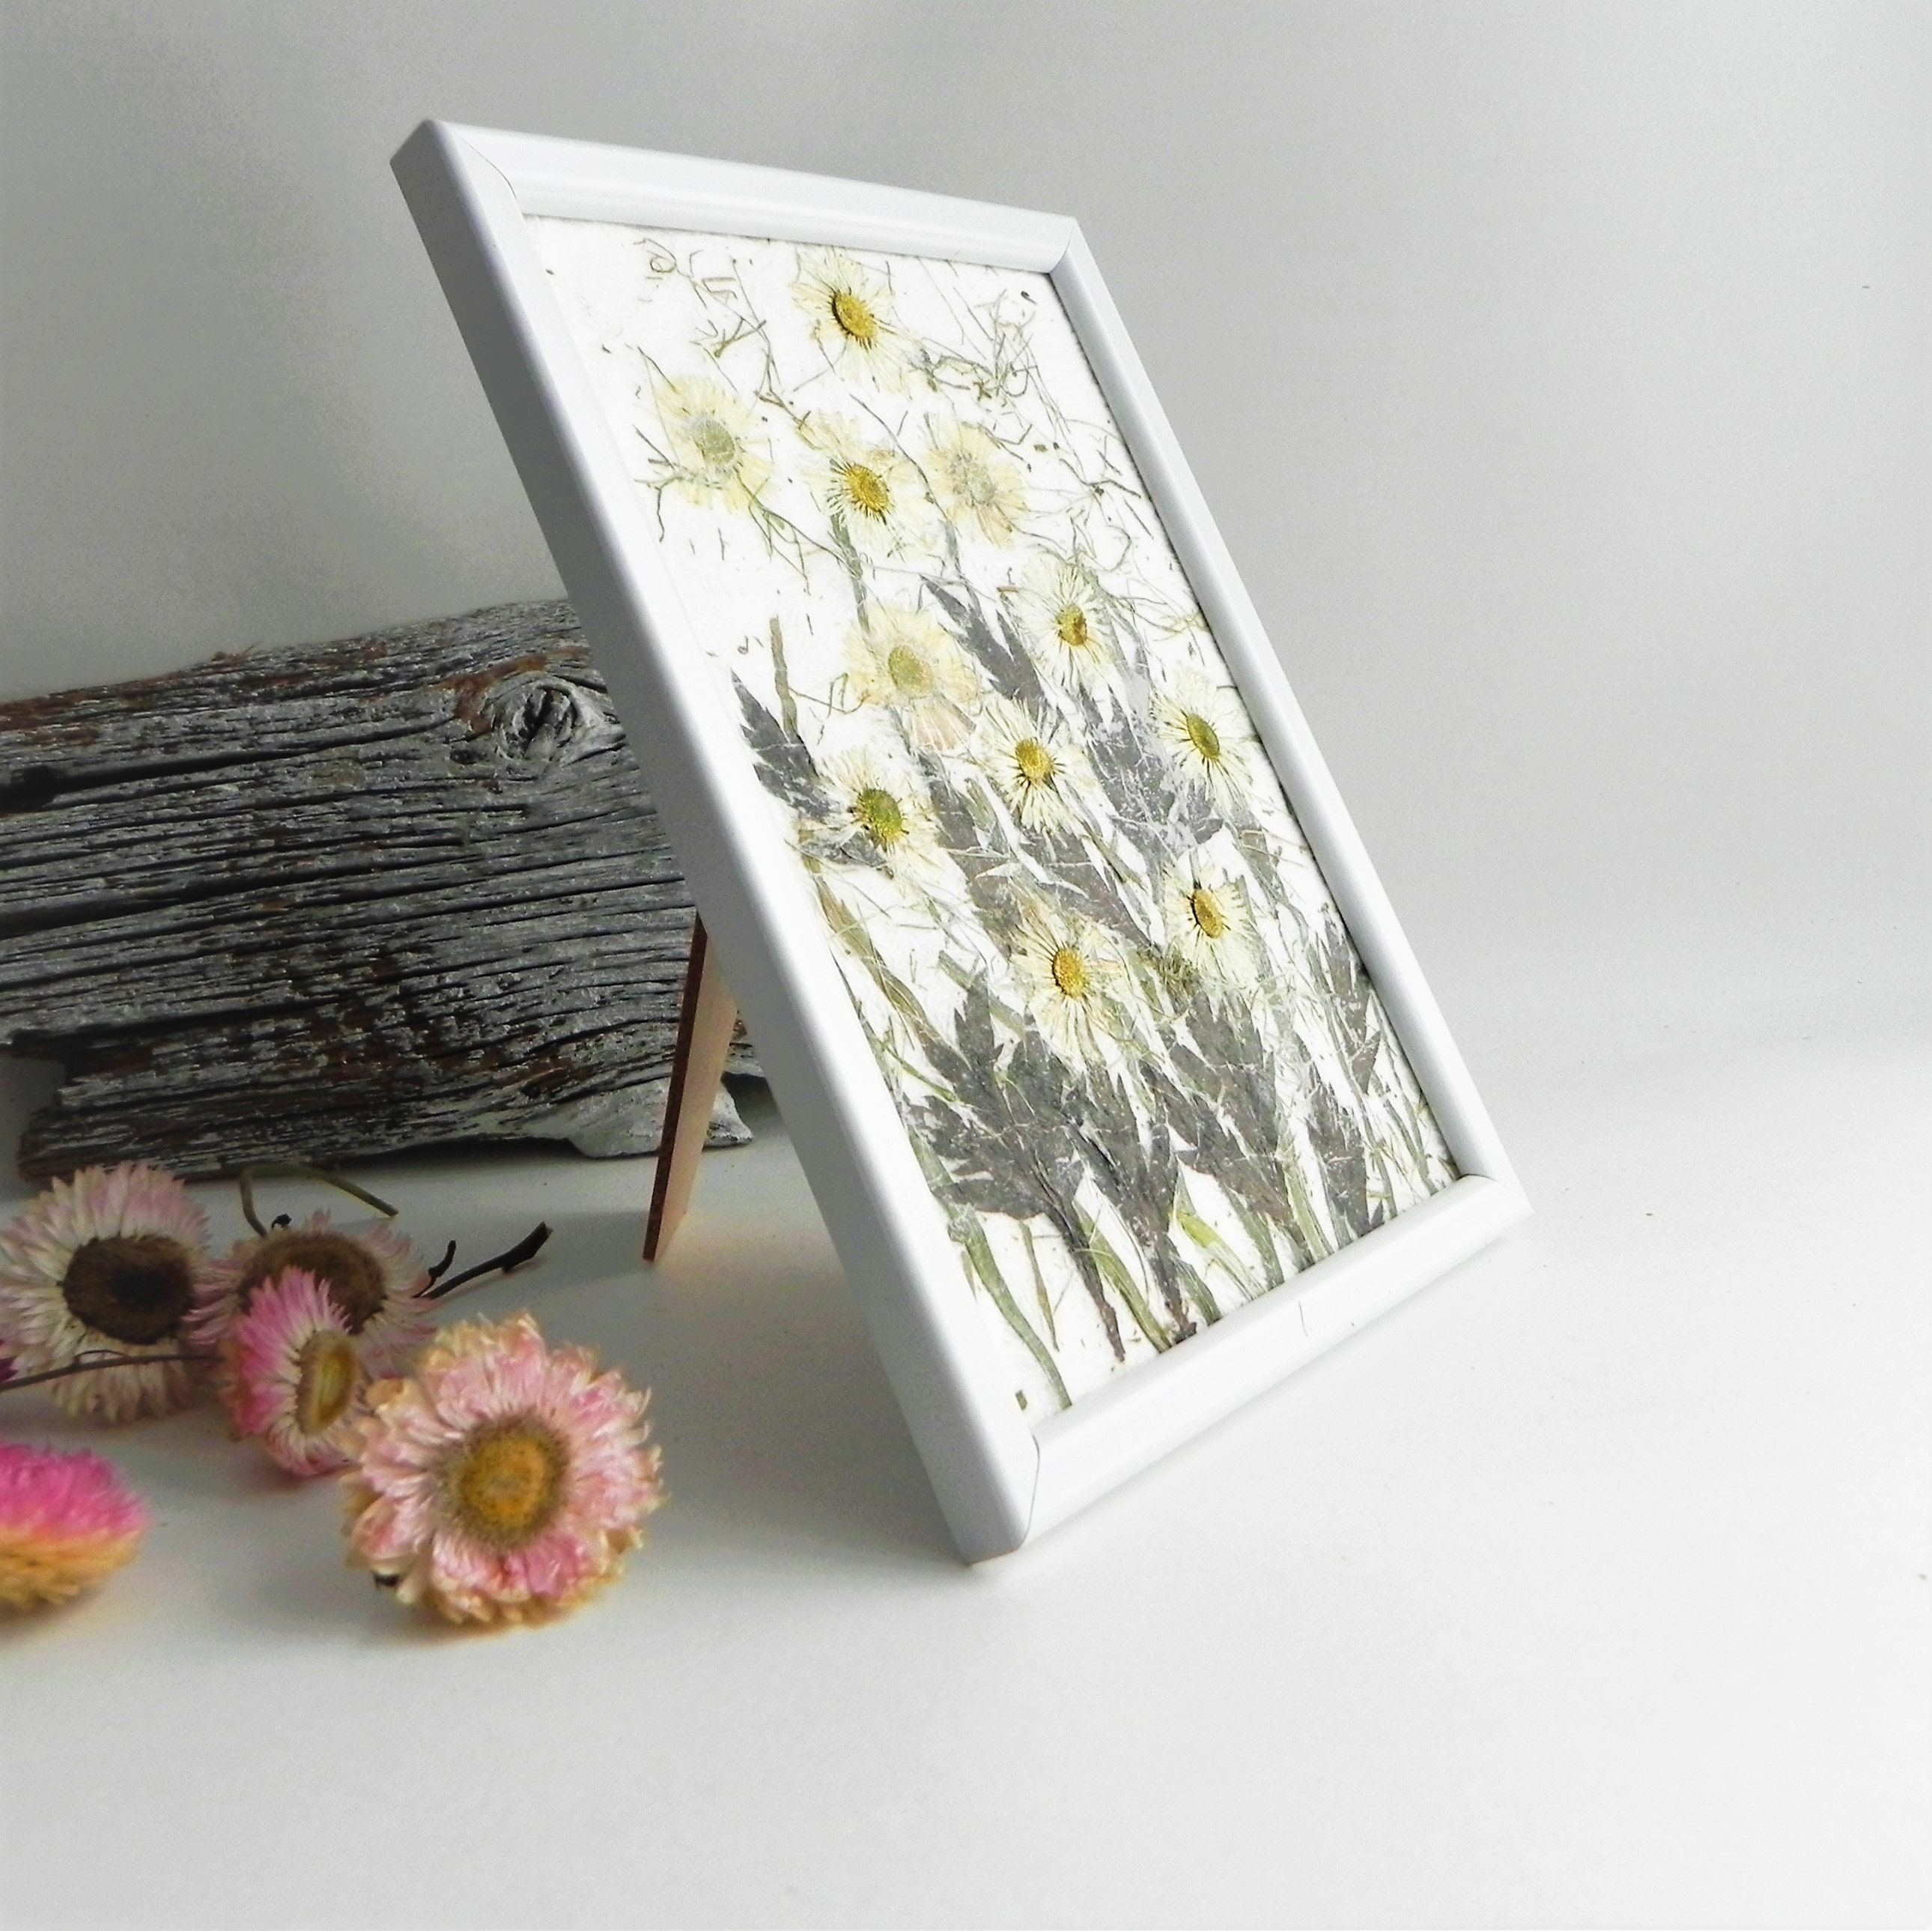 Daisy Dried Flower Framed Wall Art Nursery Hygge Home Decor Gift